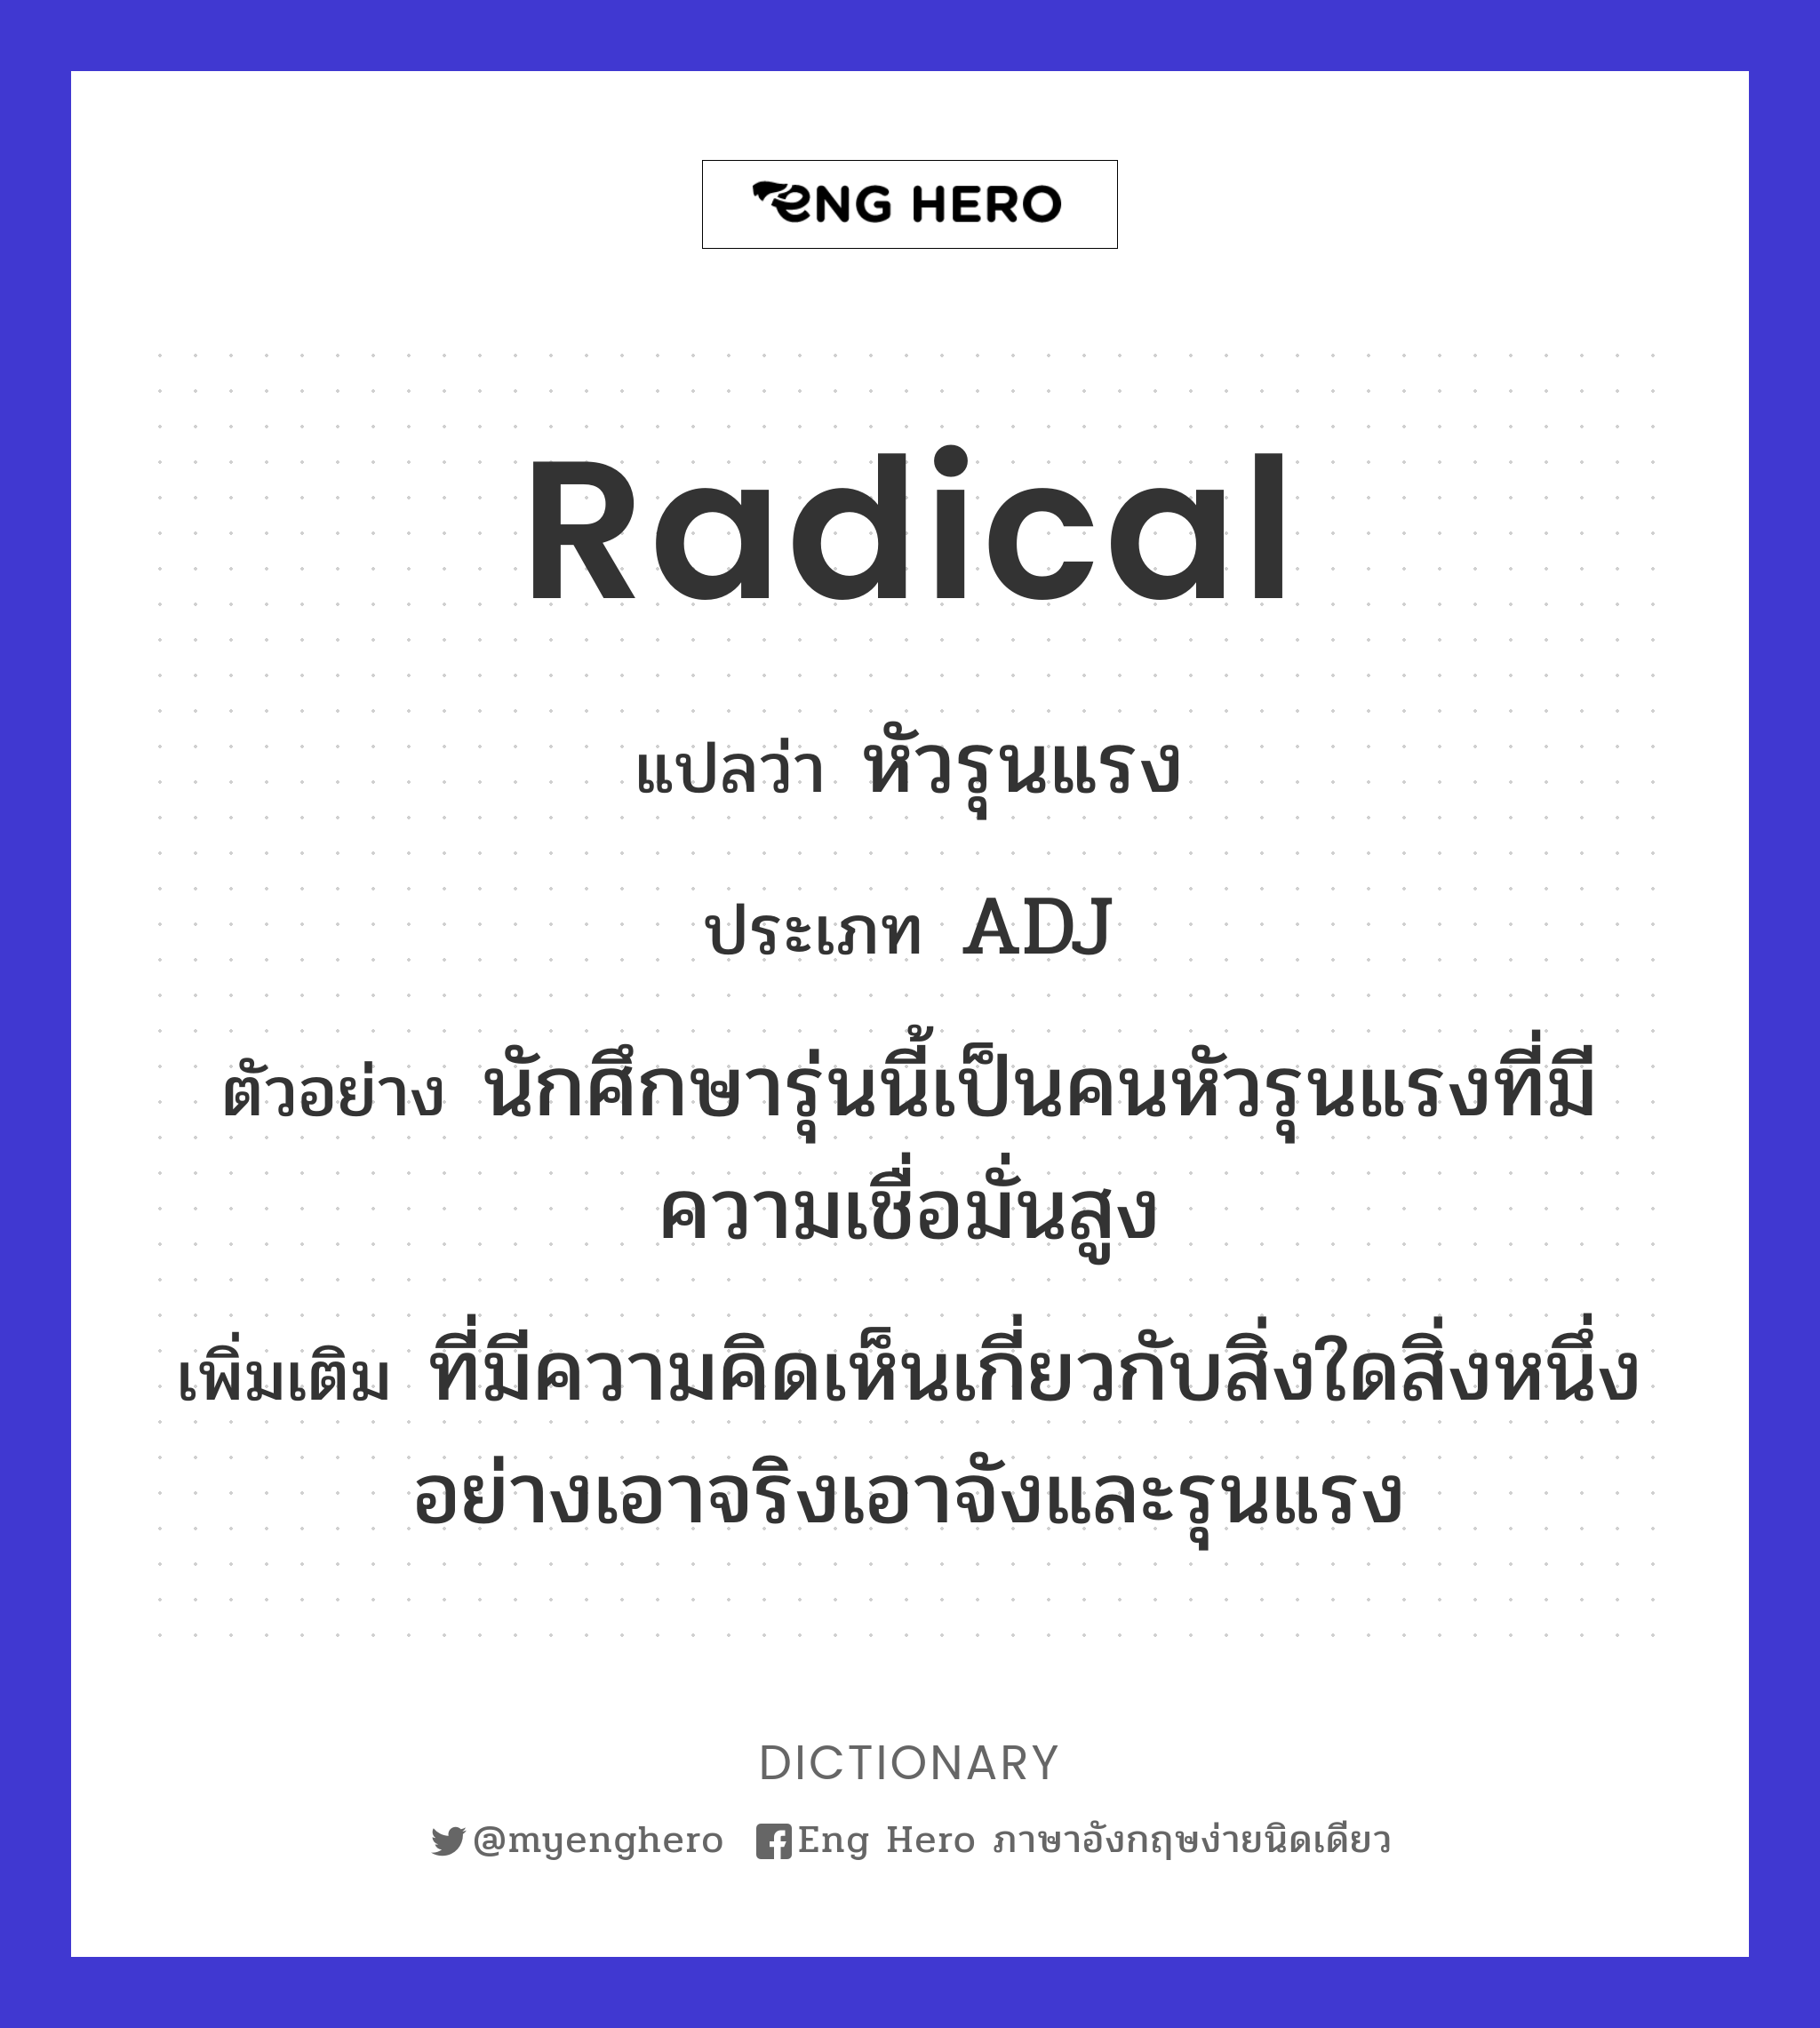 radical